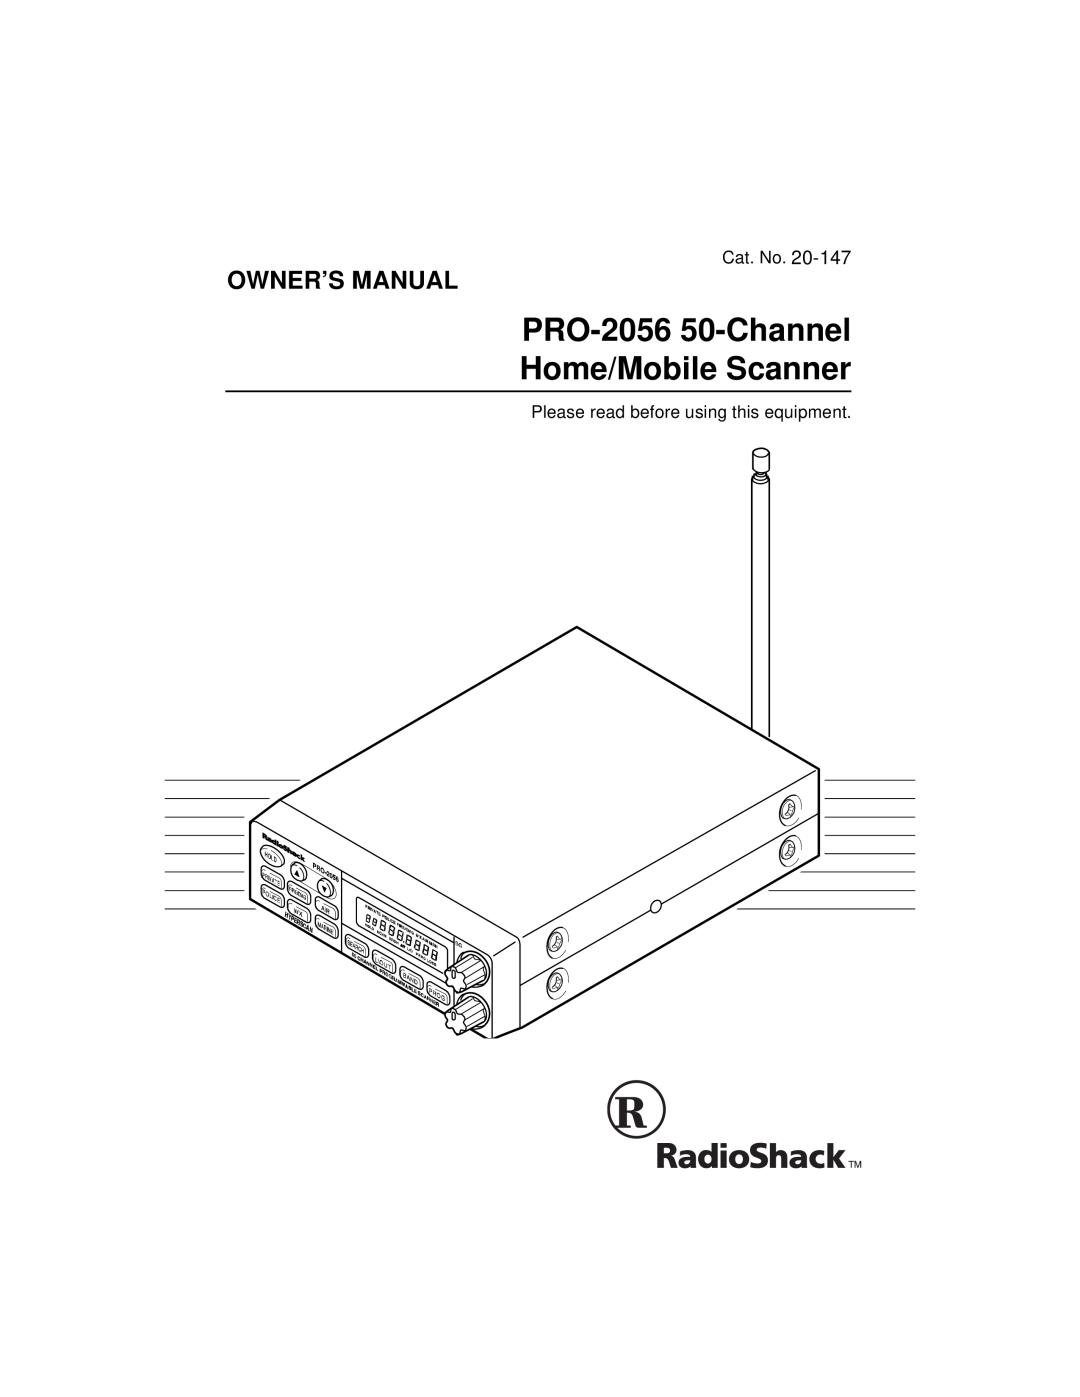 Radio Shack owner manual PRO-2056 50-Channel Home/Mobile Scanner 